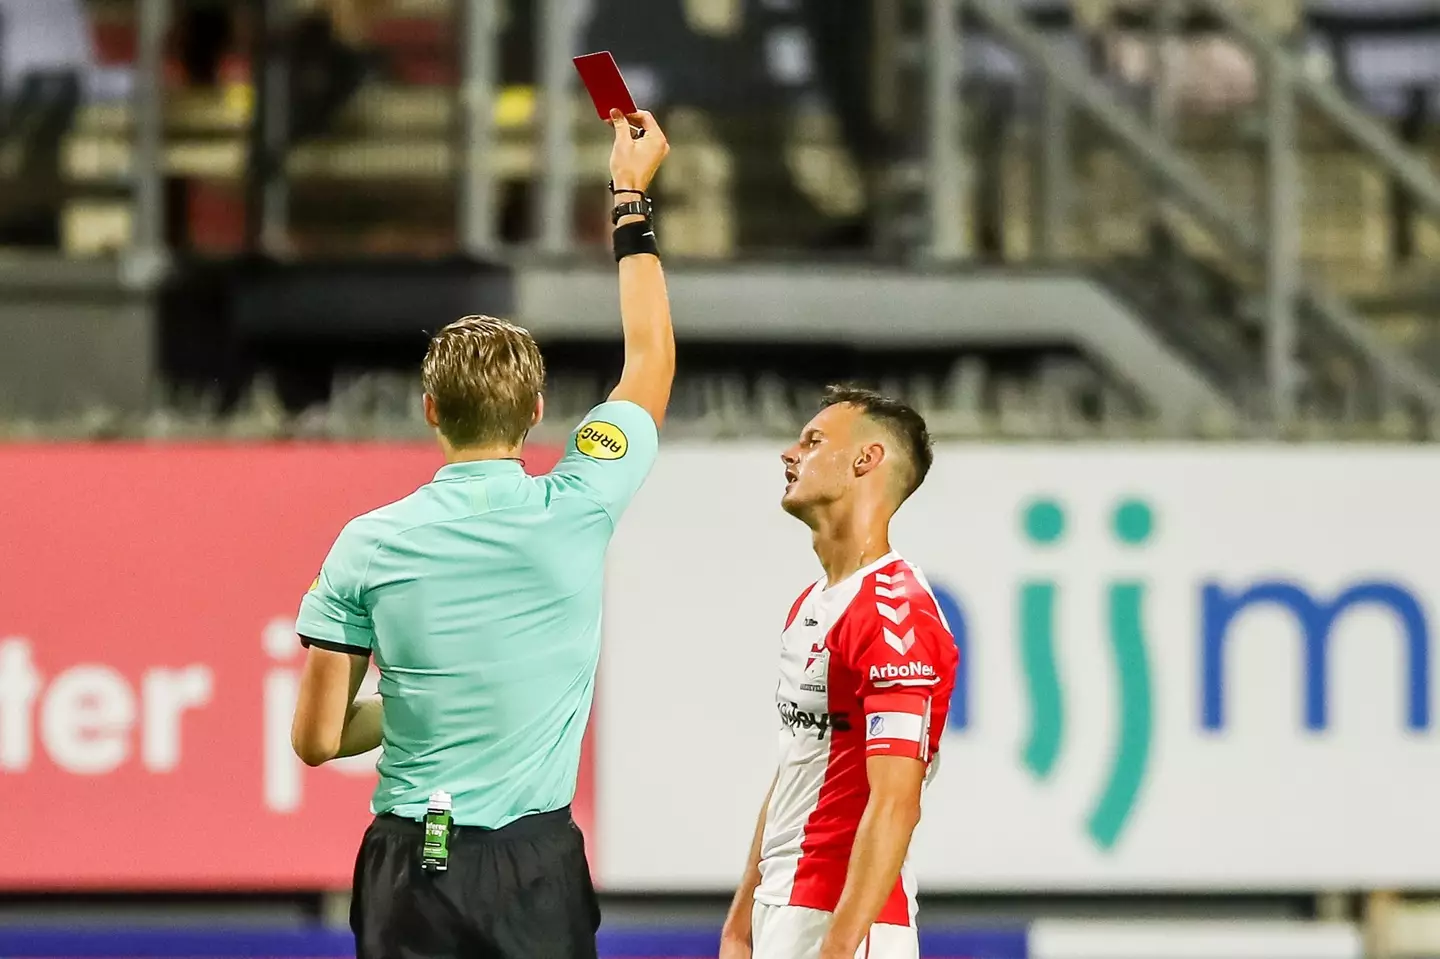 Jeff Hardeveld given the red card by referee Sander van der Eijk during the Dutch Keukenkampioendivisie match between FC Emmen and FC Eindhoven. Image credit: Alamy